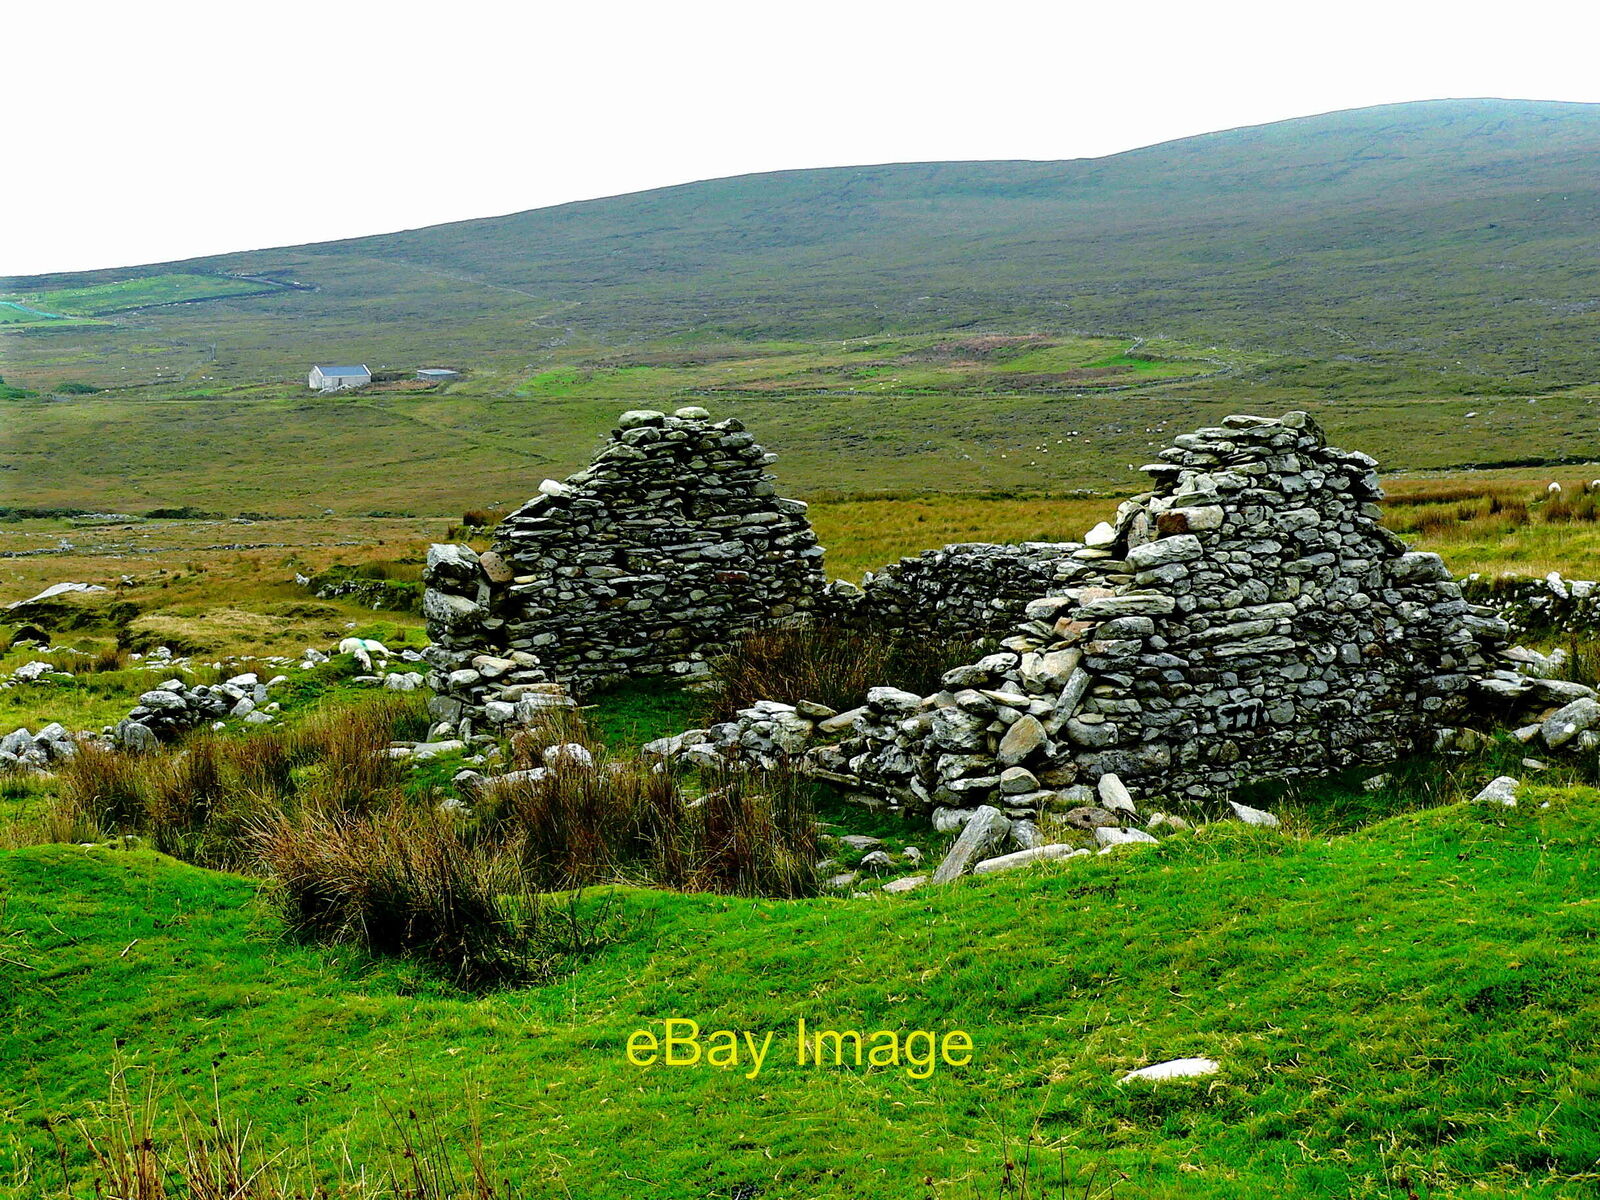 Photo 12x8 Achill Island - Deserted Village - Cottage Ruins &  a Habitable Cotta